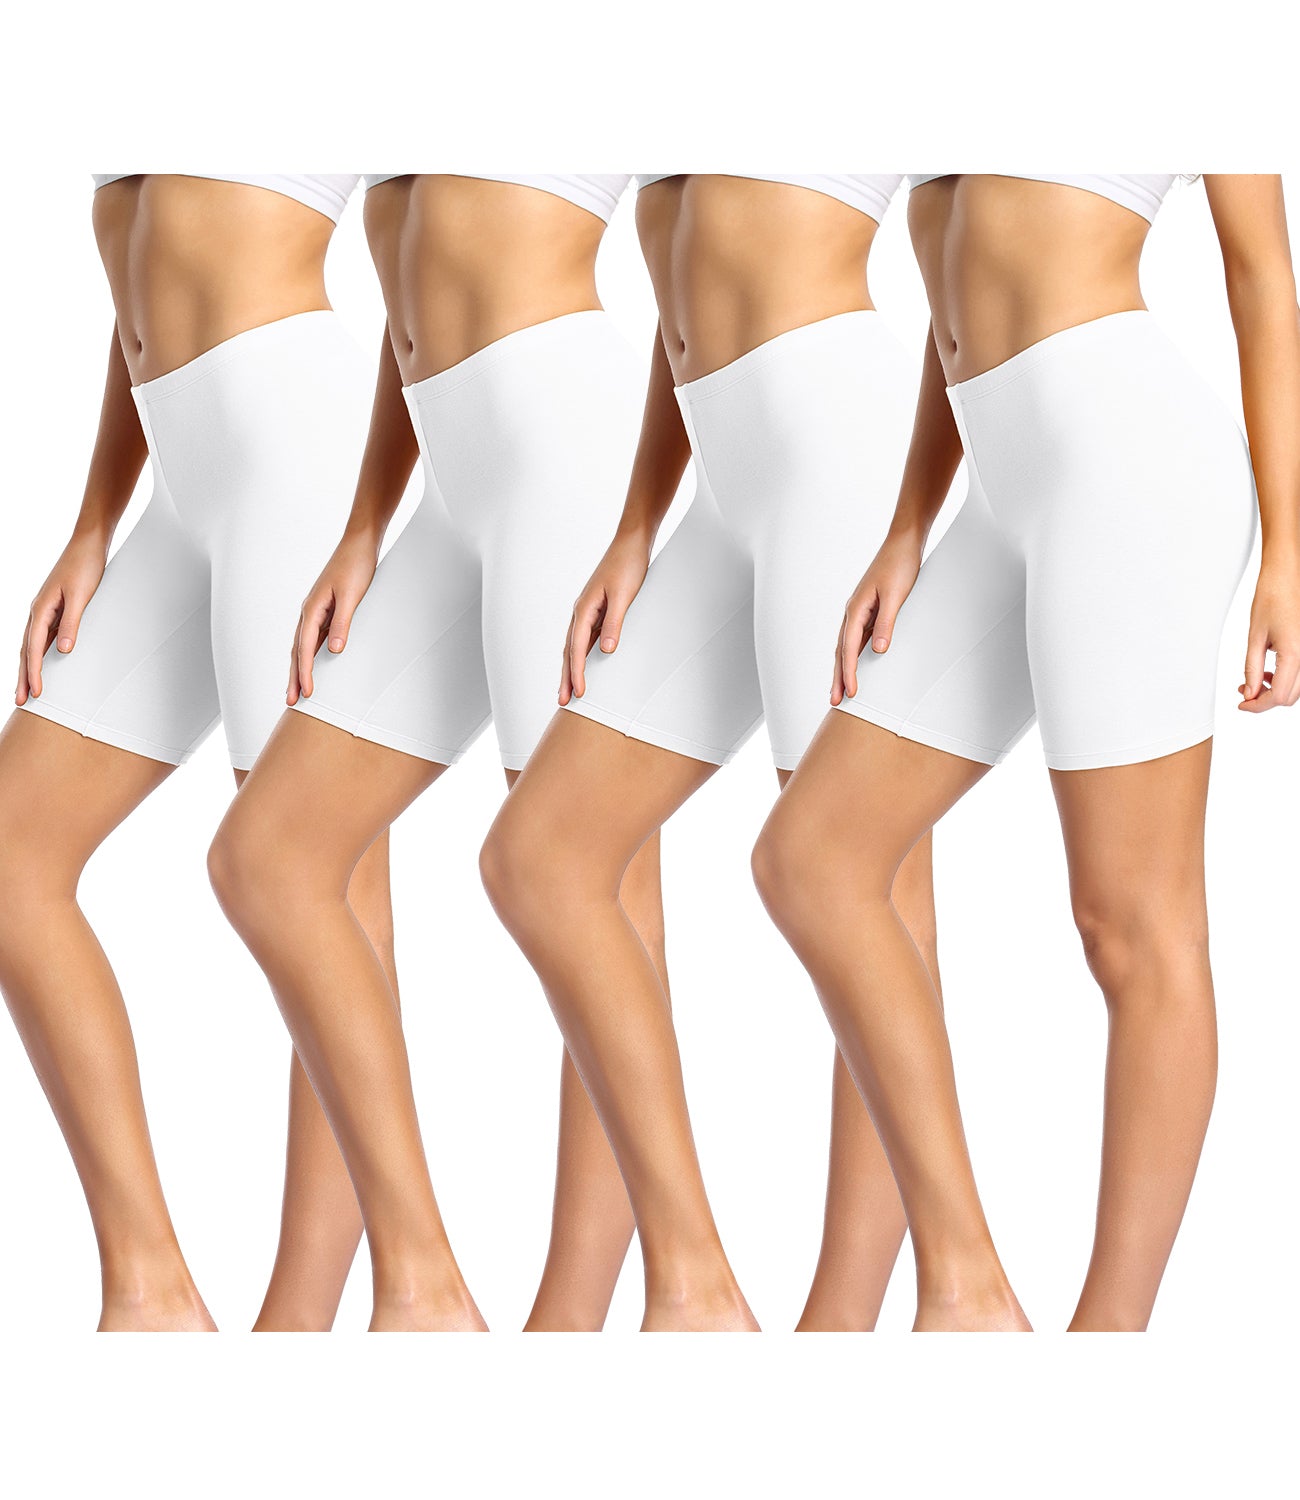 wirarpa Women’s Chafe Free Cotton Safety Shorts Boyshorts 4 Pack - Wirarpa Apparel, Inc.